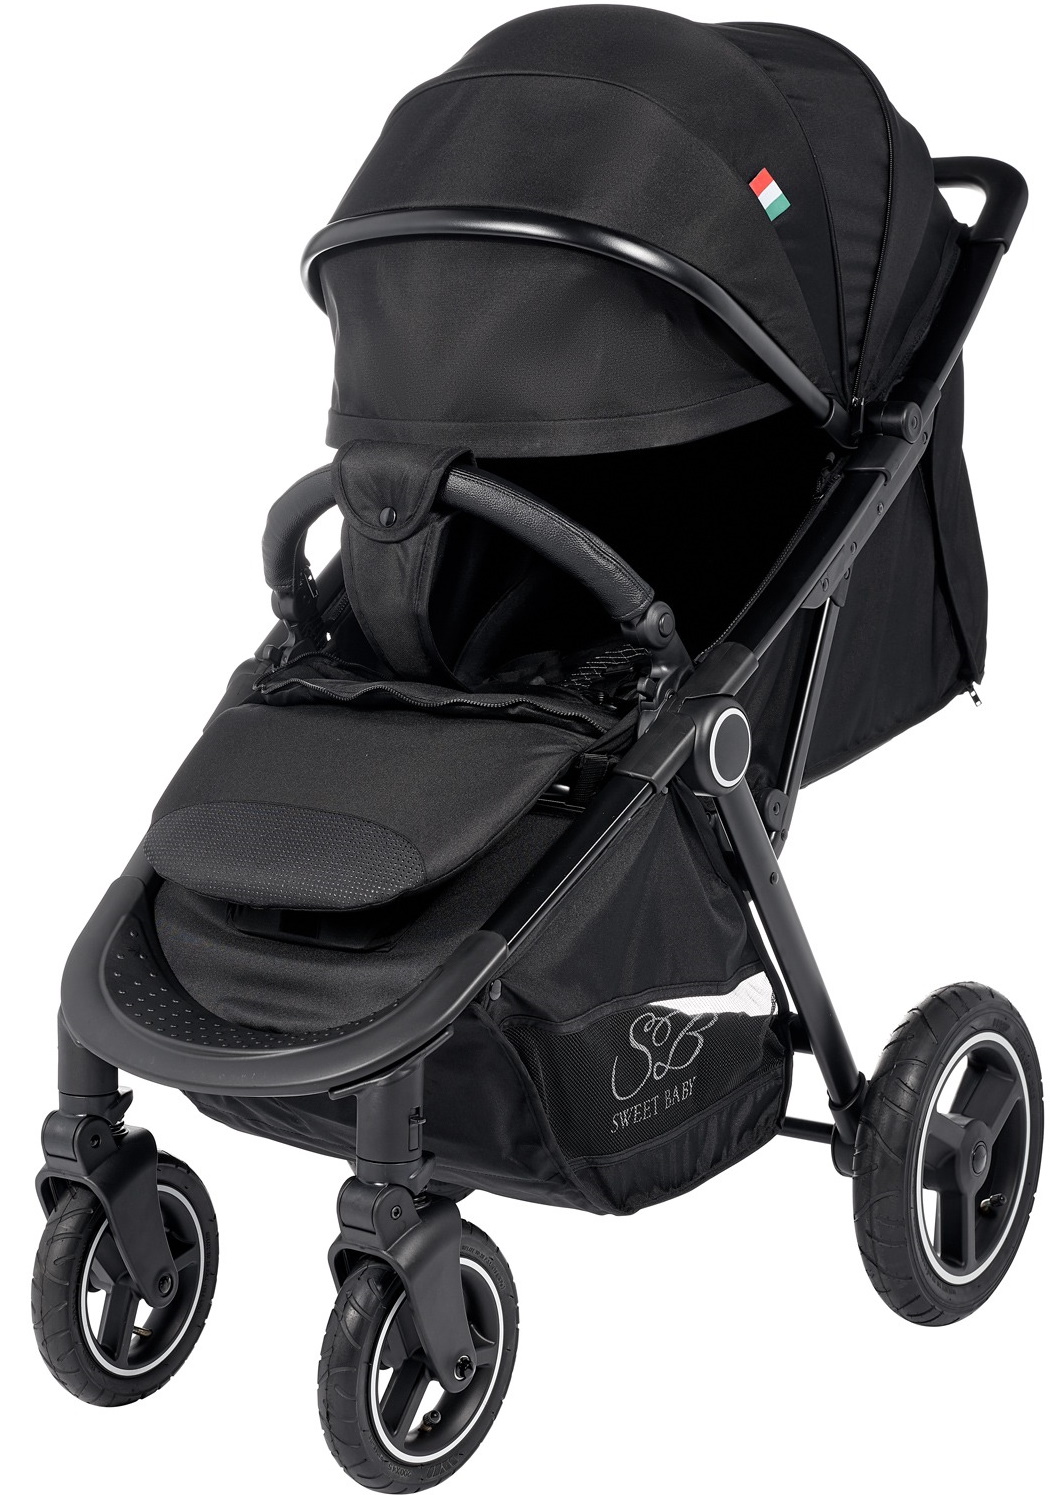 Прогулочная коляска Sweet Baby Suburban Compatto Air, цвет: черный прогулочная коляска sweet baby compatto light green 426623